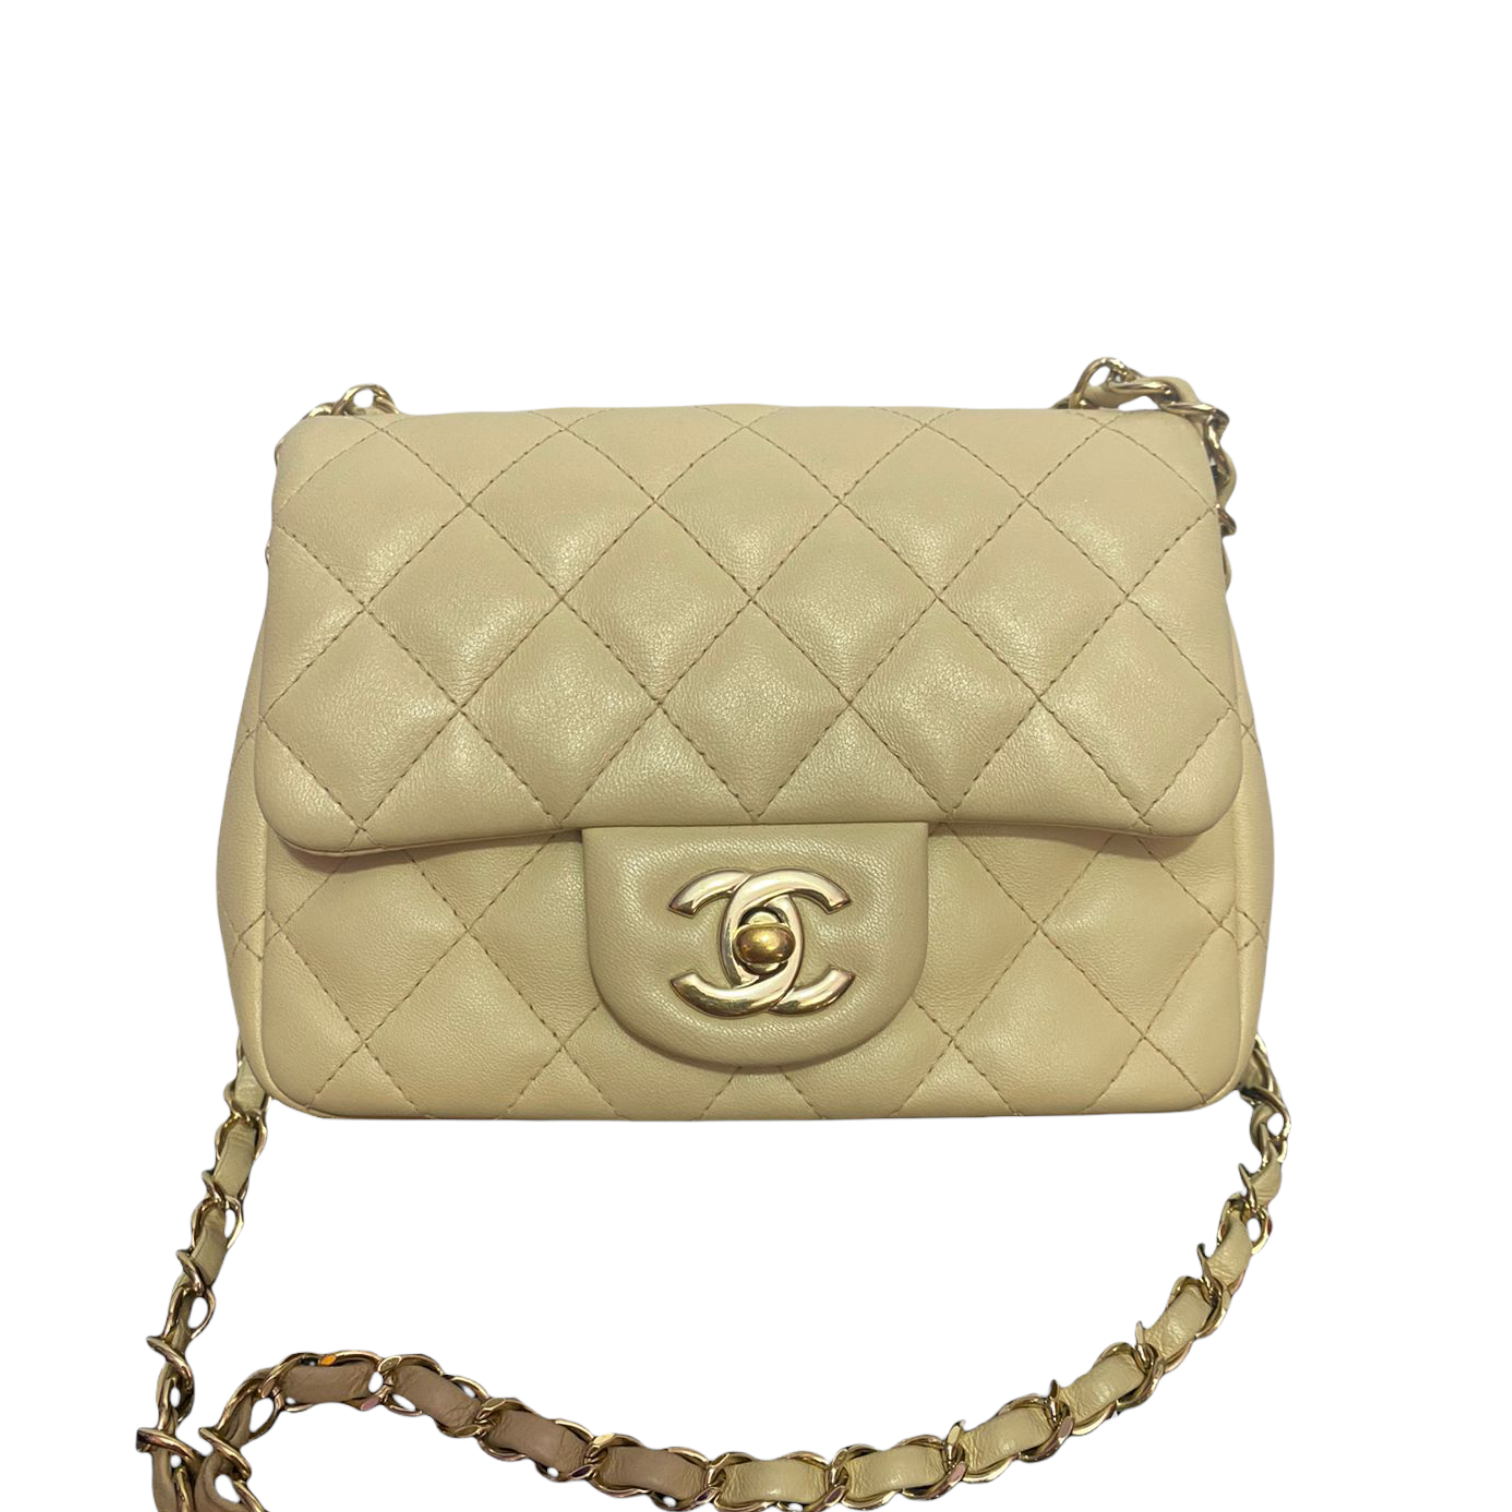 Chanel Mini Square Beige bag - The Luxury Flavor